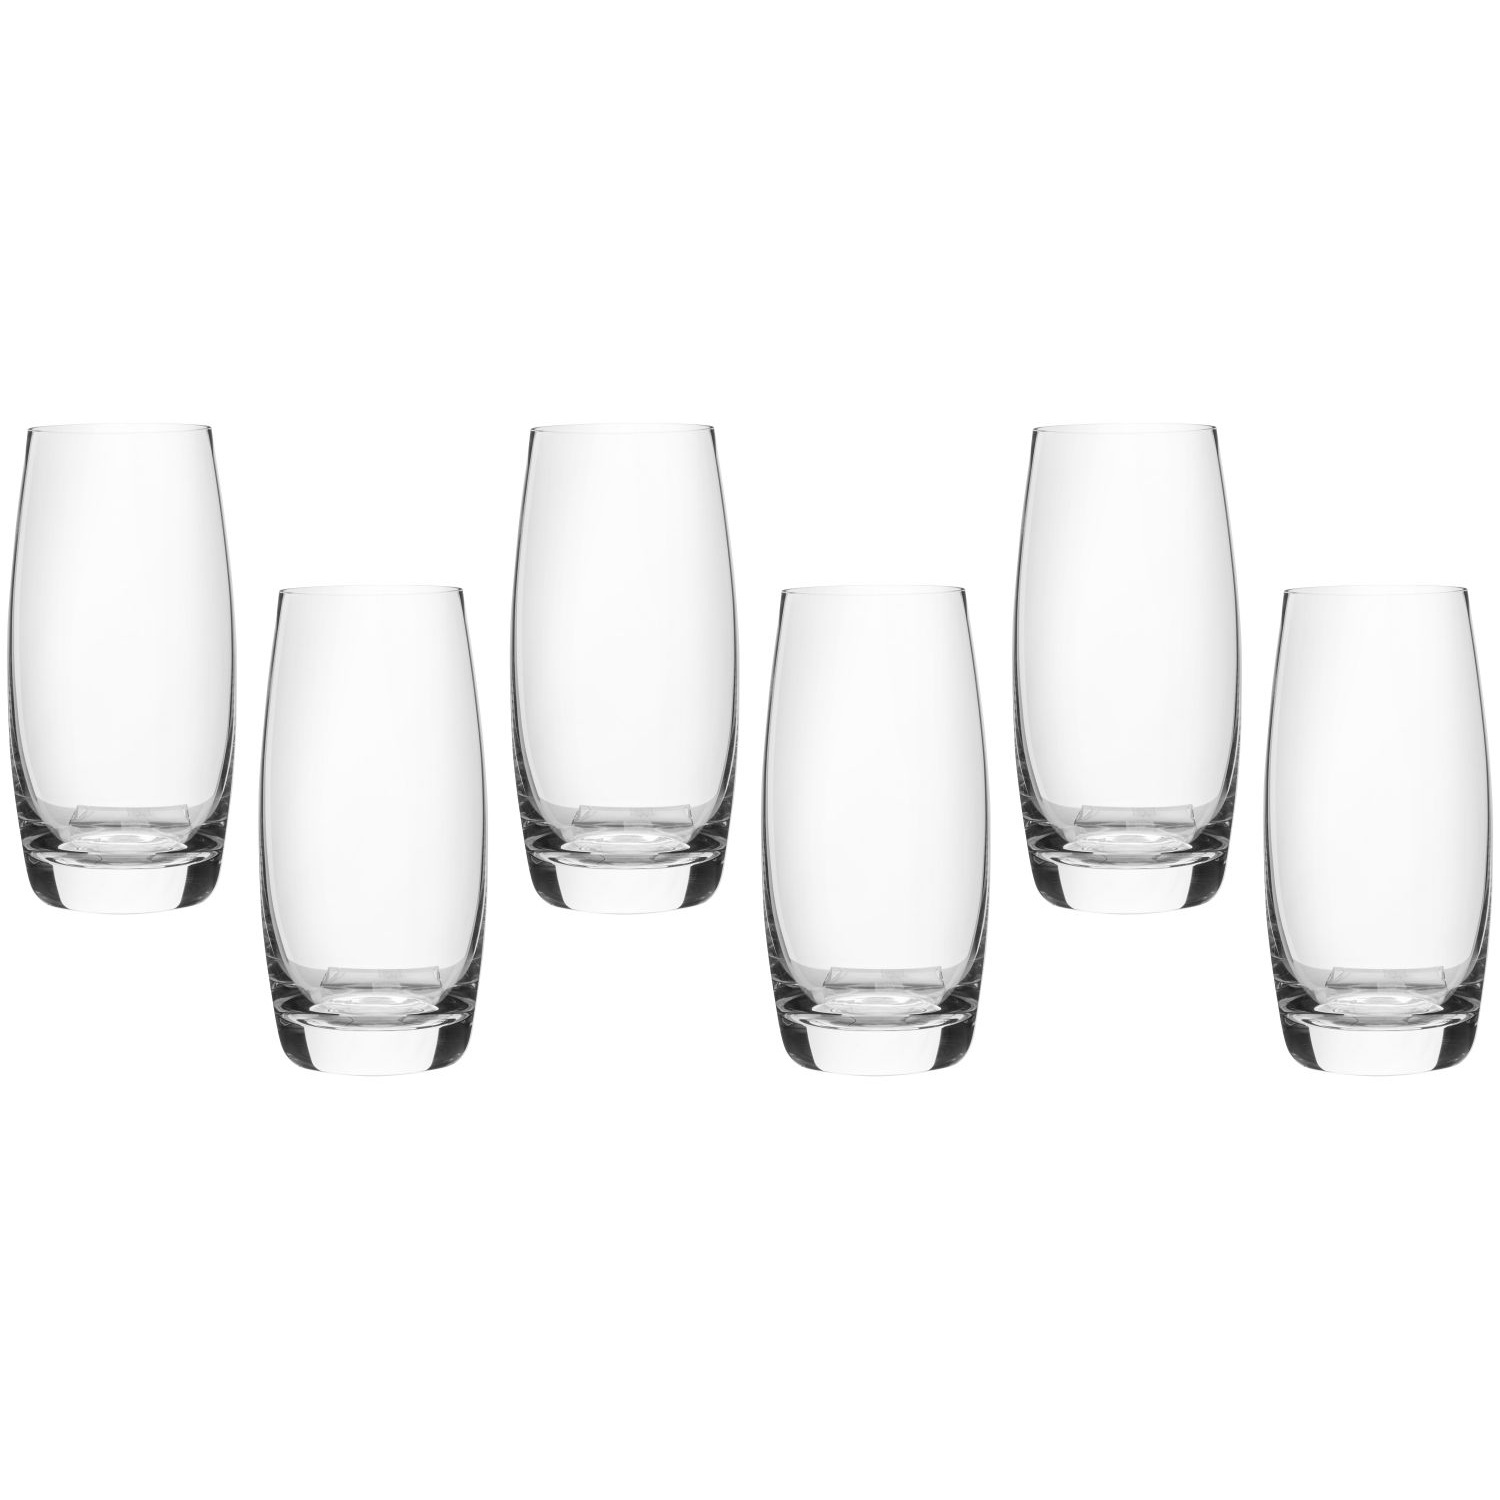 Набор стаканов Maxwell & Williams Cosmopolitan для воды 0,4 л набор стаканов для пива bohemia crystall 550 мл ассорти 4 шт